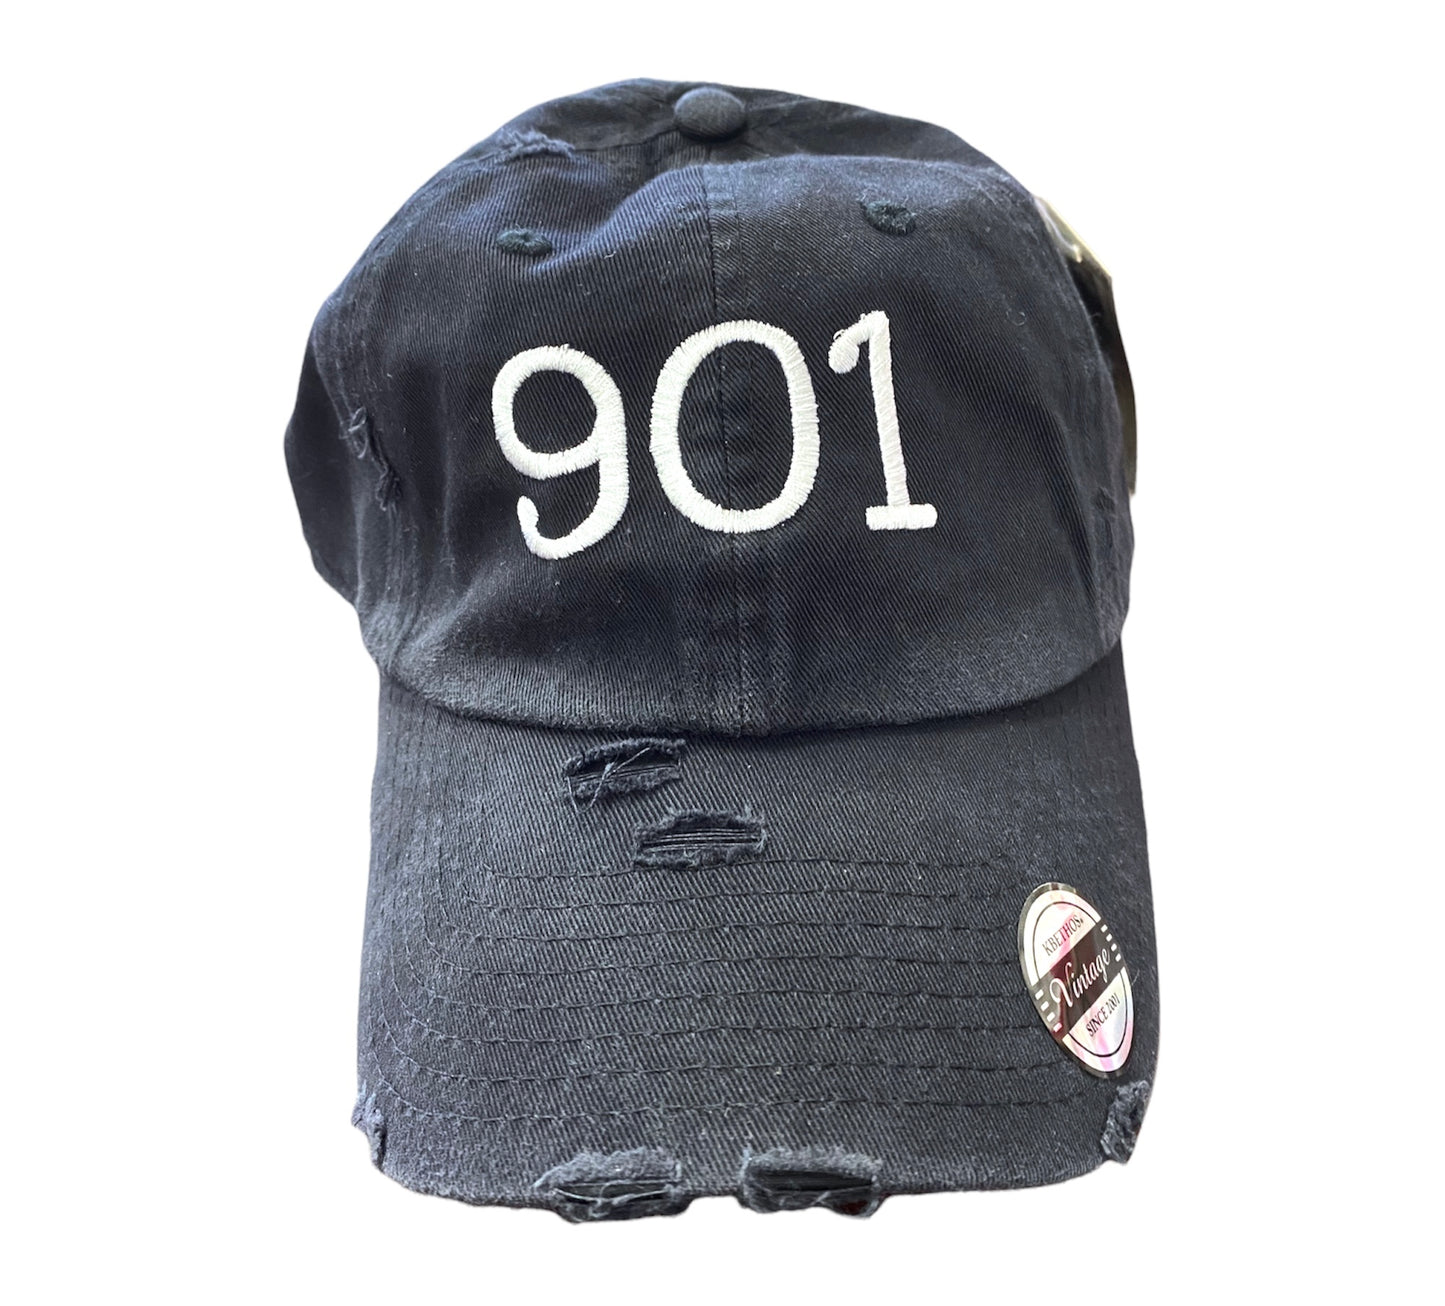 New 901 hats